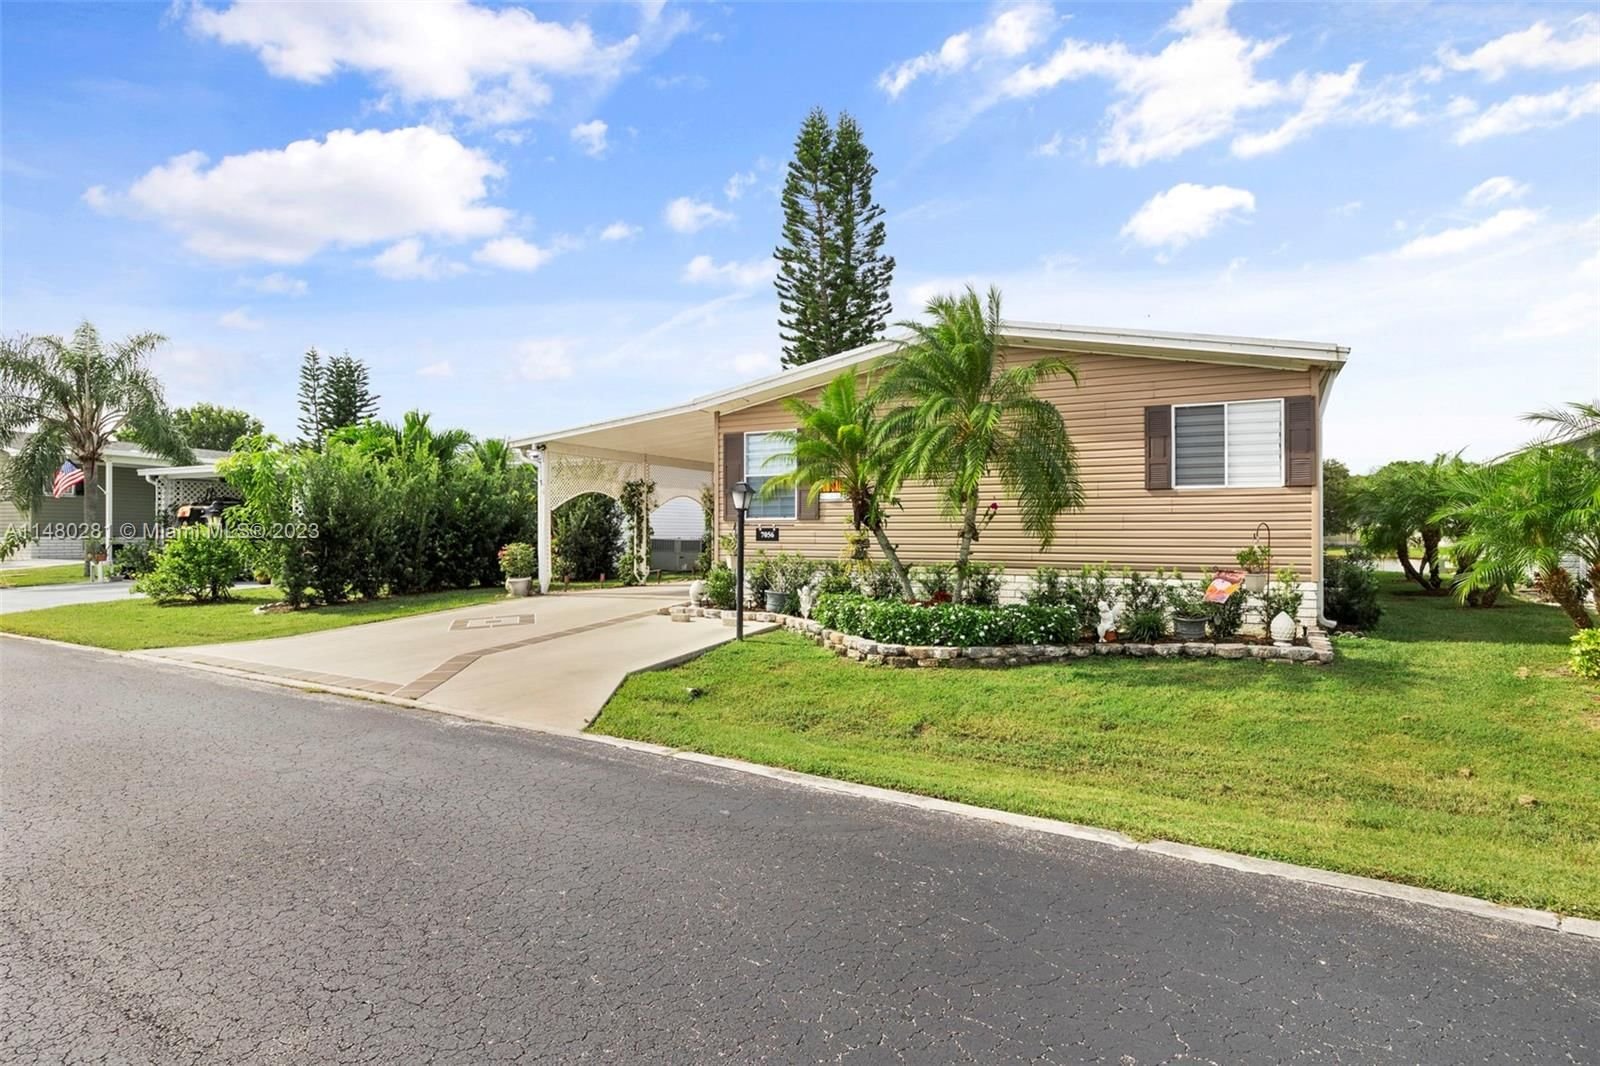 Real estate property located at 7056 Birchwood ln, Martin County, Pinelake Gardens & Estates, Stuart, FL